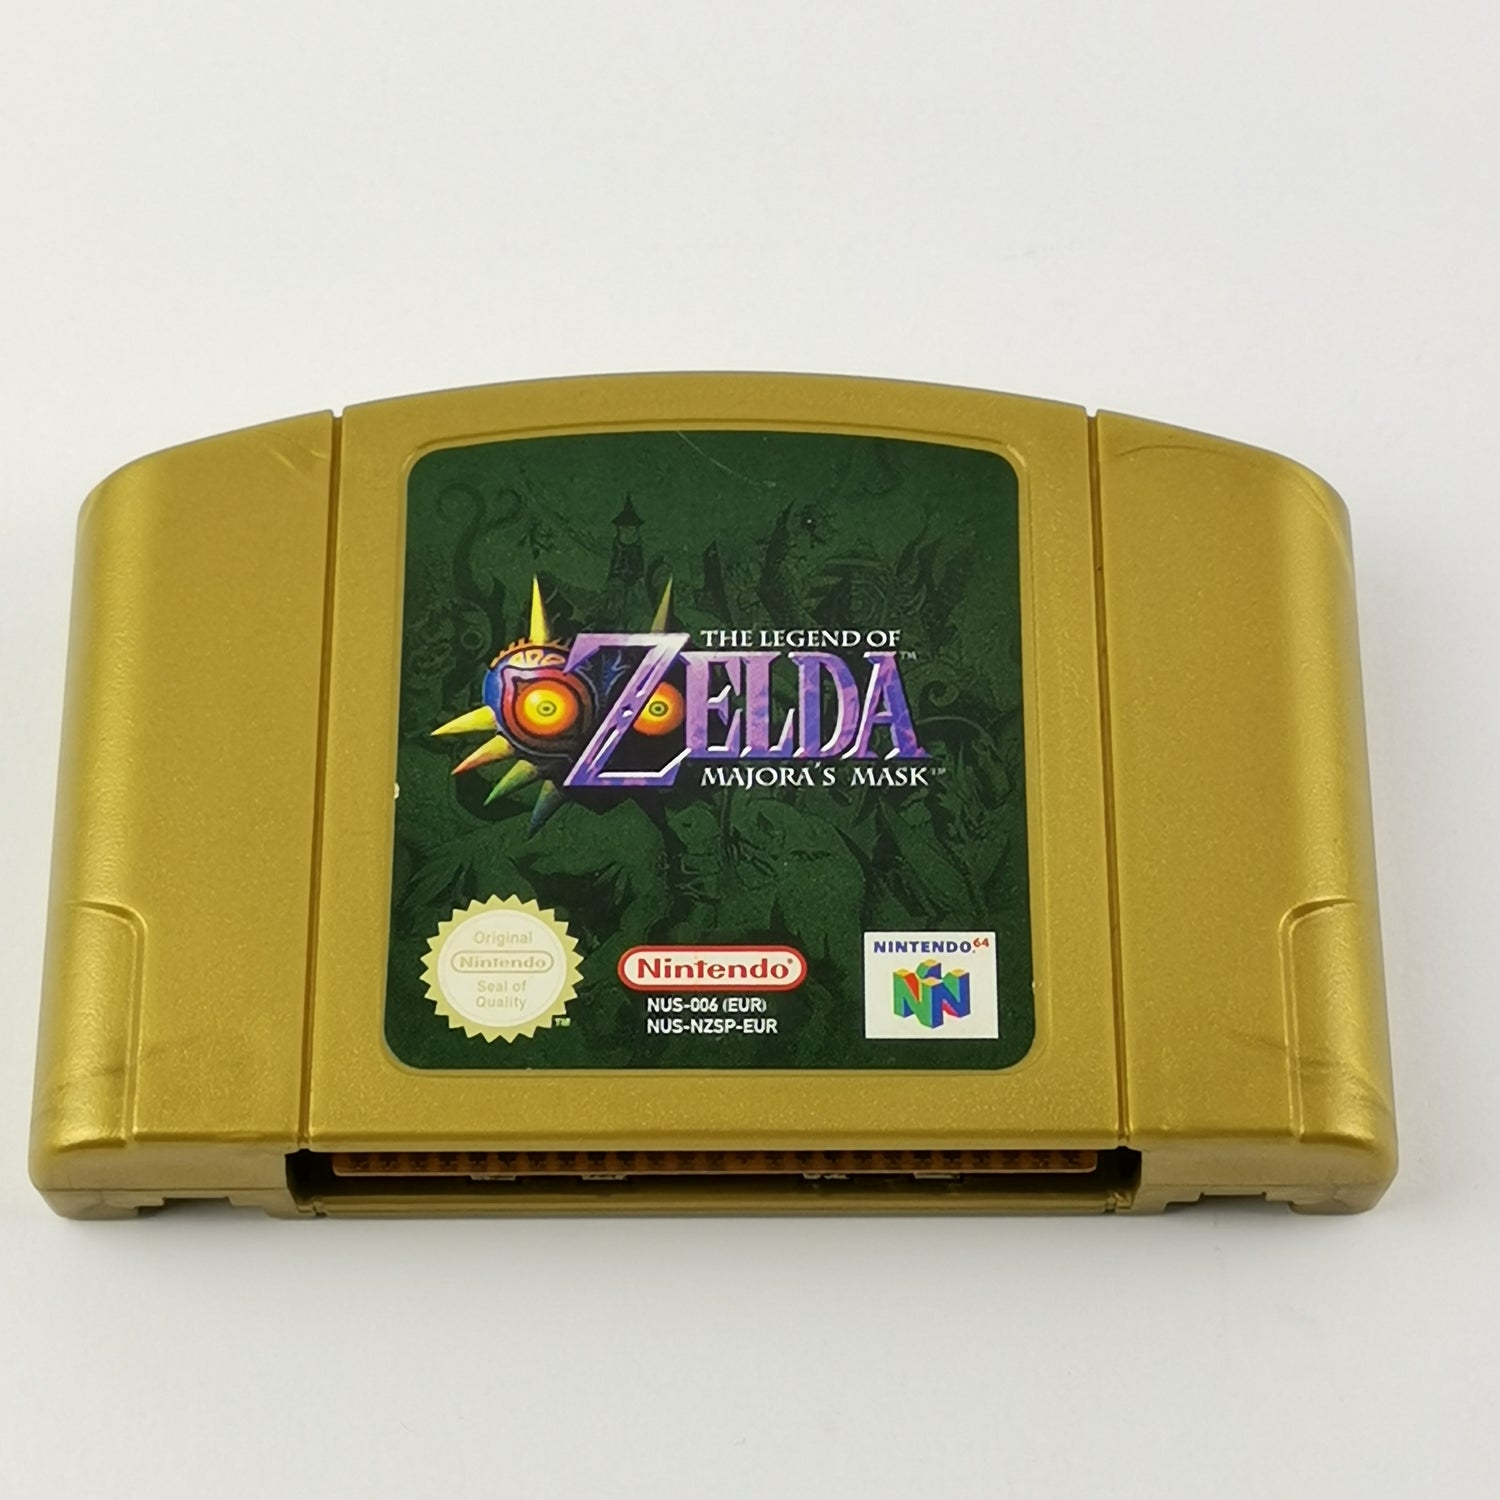 Nintendo 64 Game: The Legend of Zelda Majoras Mask - N64 Module Cartridge PAL